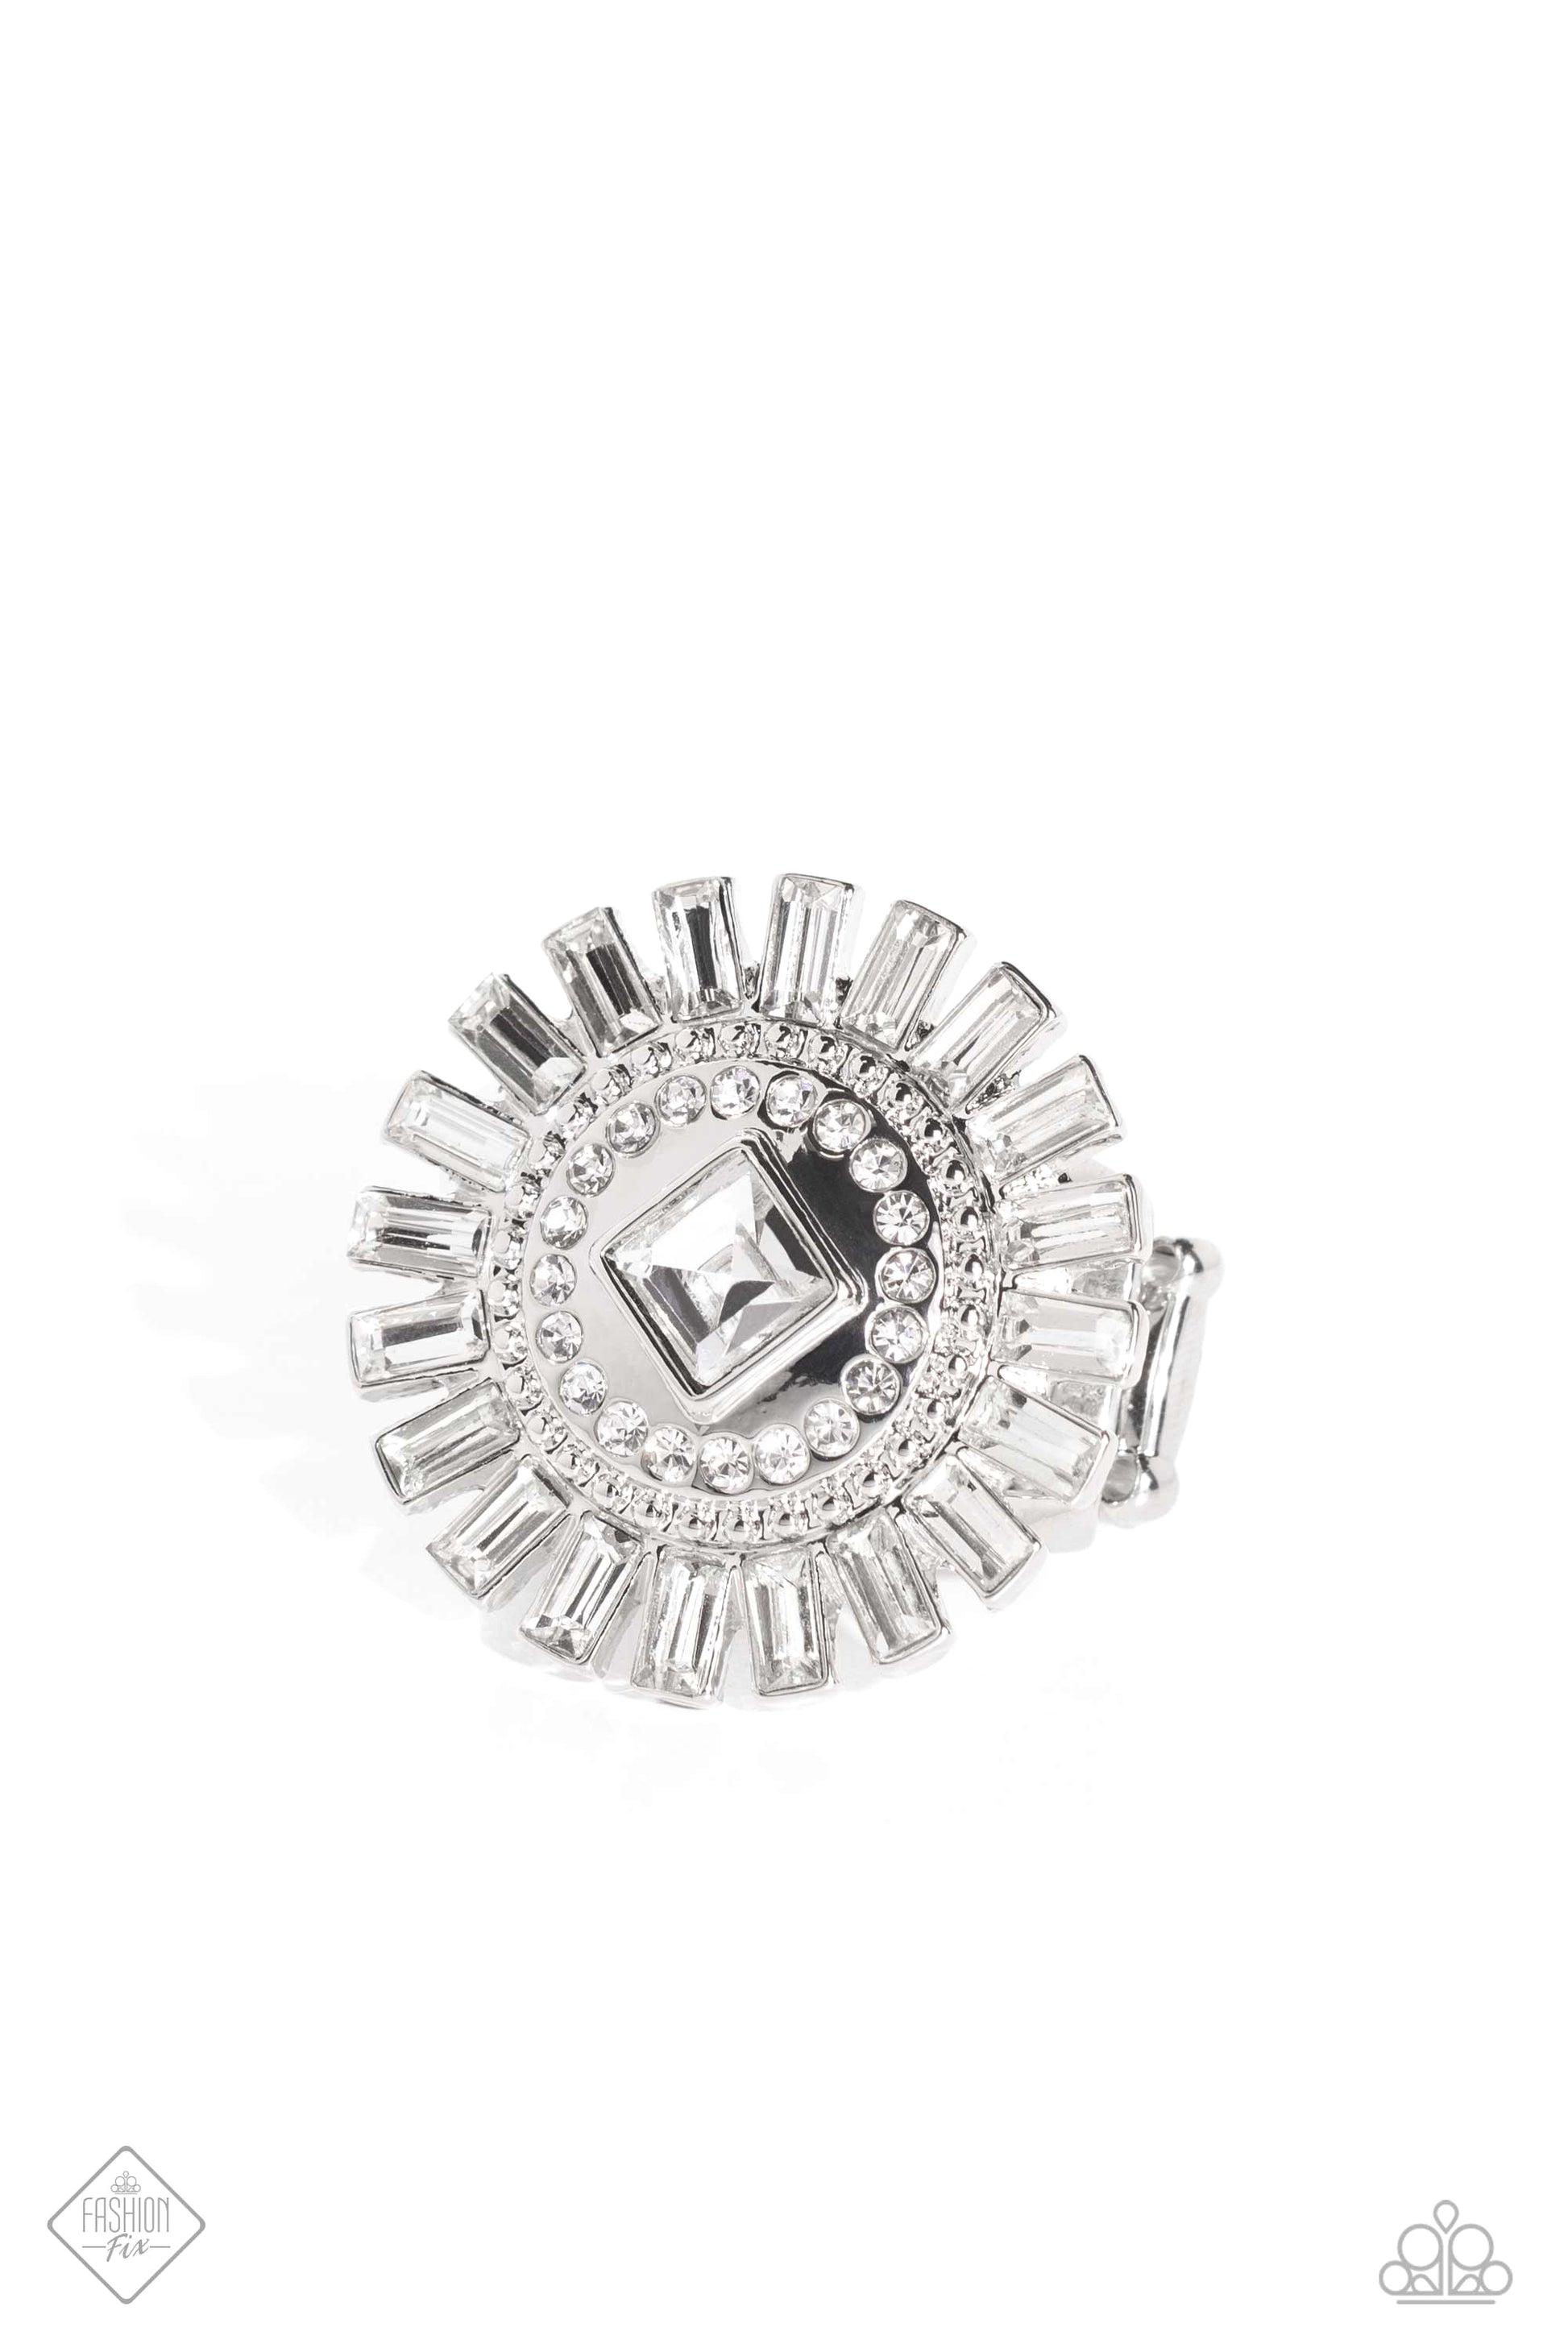 Shimmery Sprinkle - white - Paparazzi ring